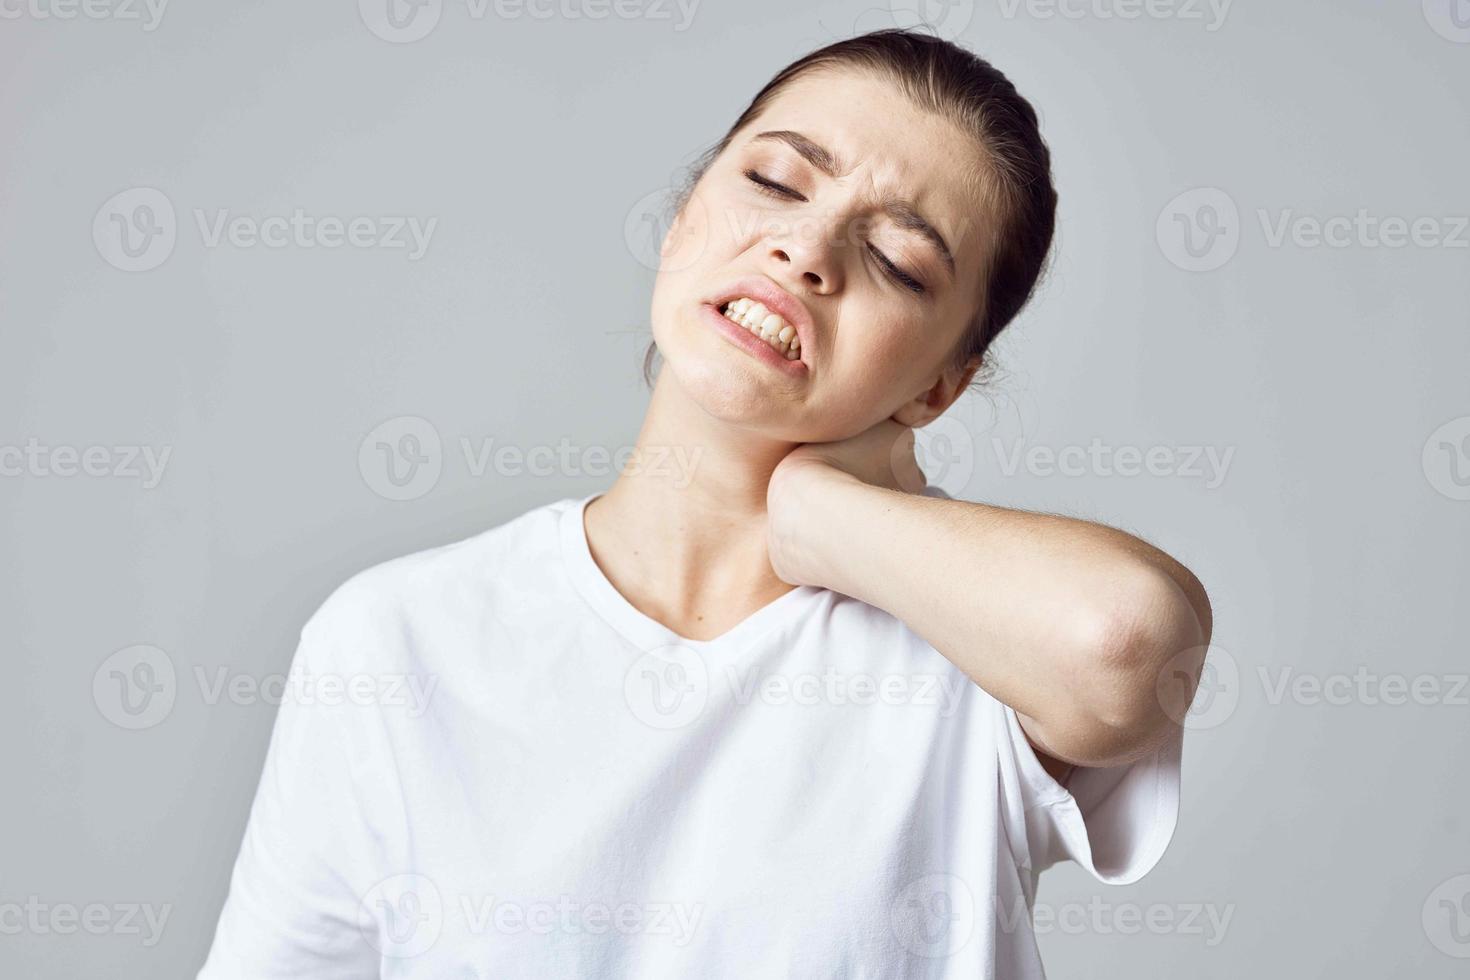 missnöjd kvinna i vit t-shirt gemensam smärta hälsa problem känslor foto